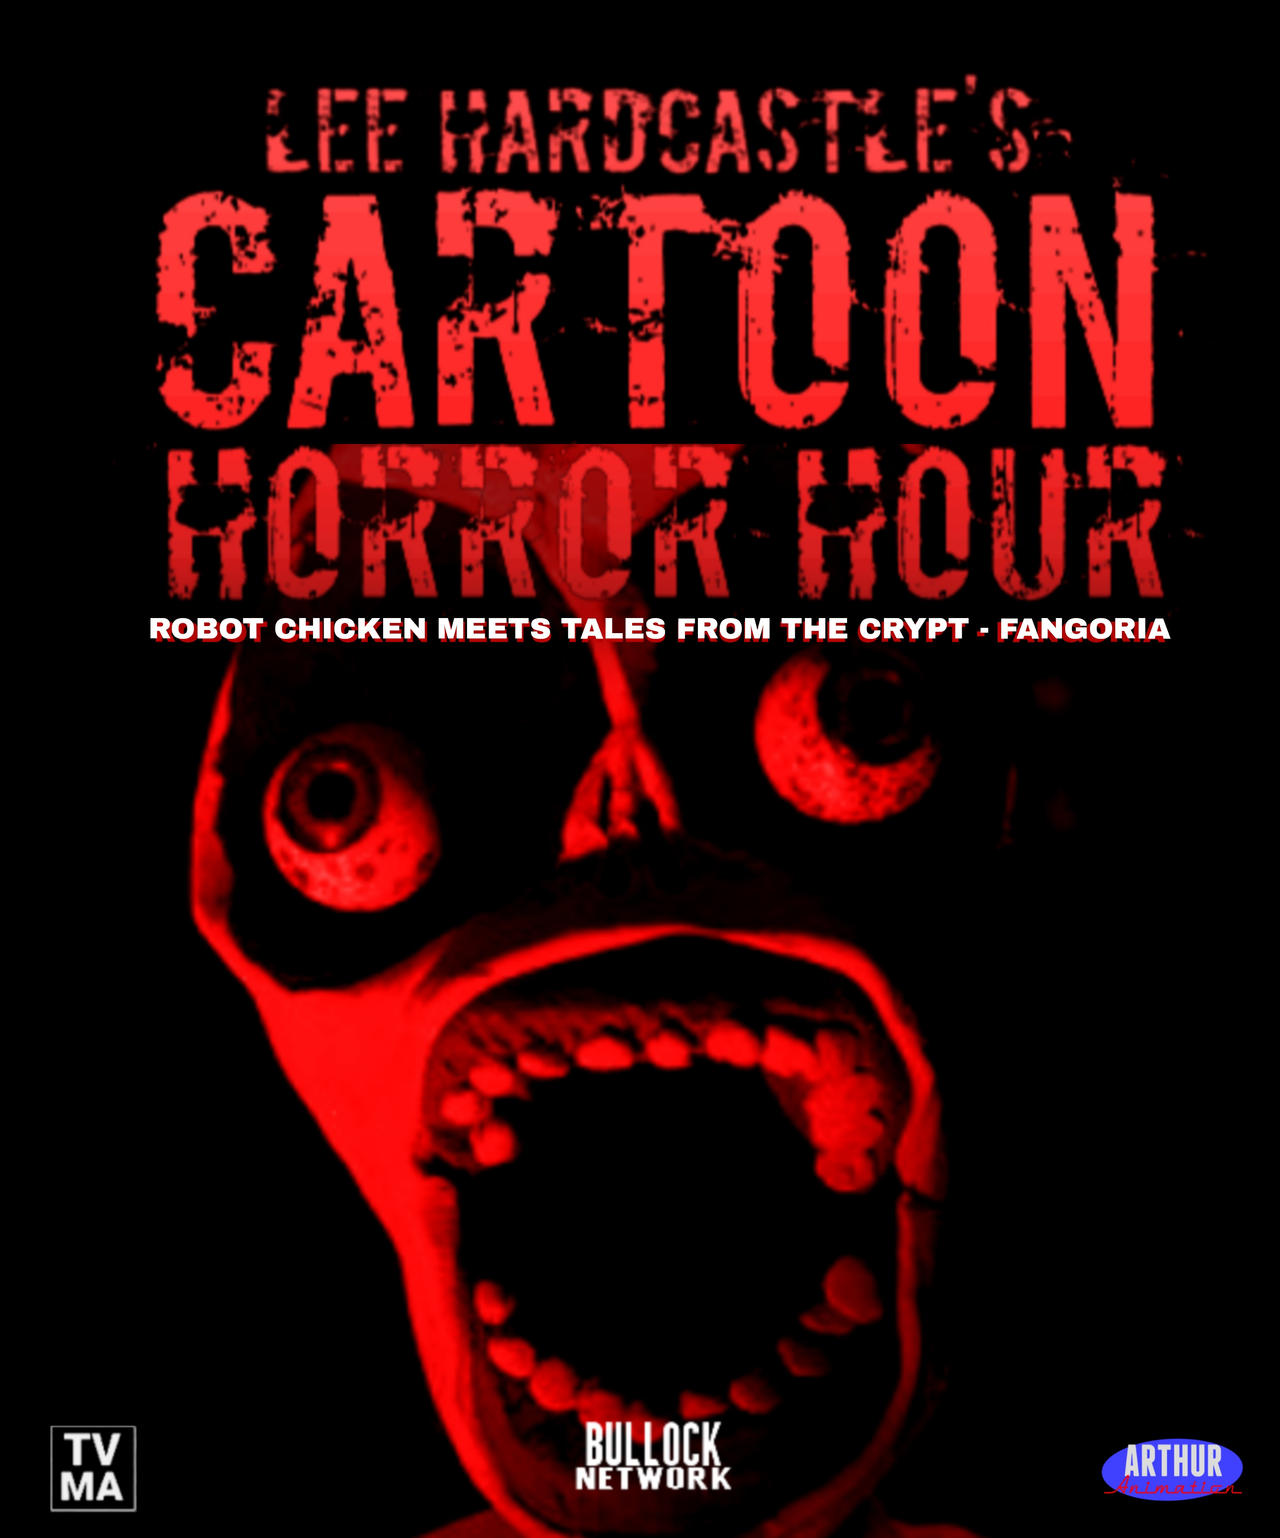 Lee Hardcastle's Cartoon Horror Hour by arthurbullock on DeviantArt